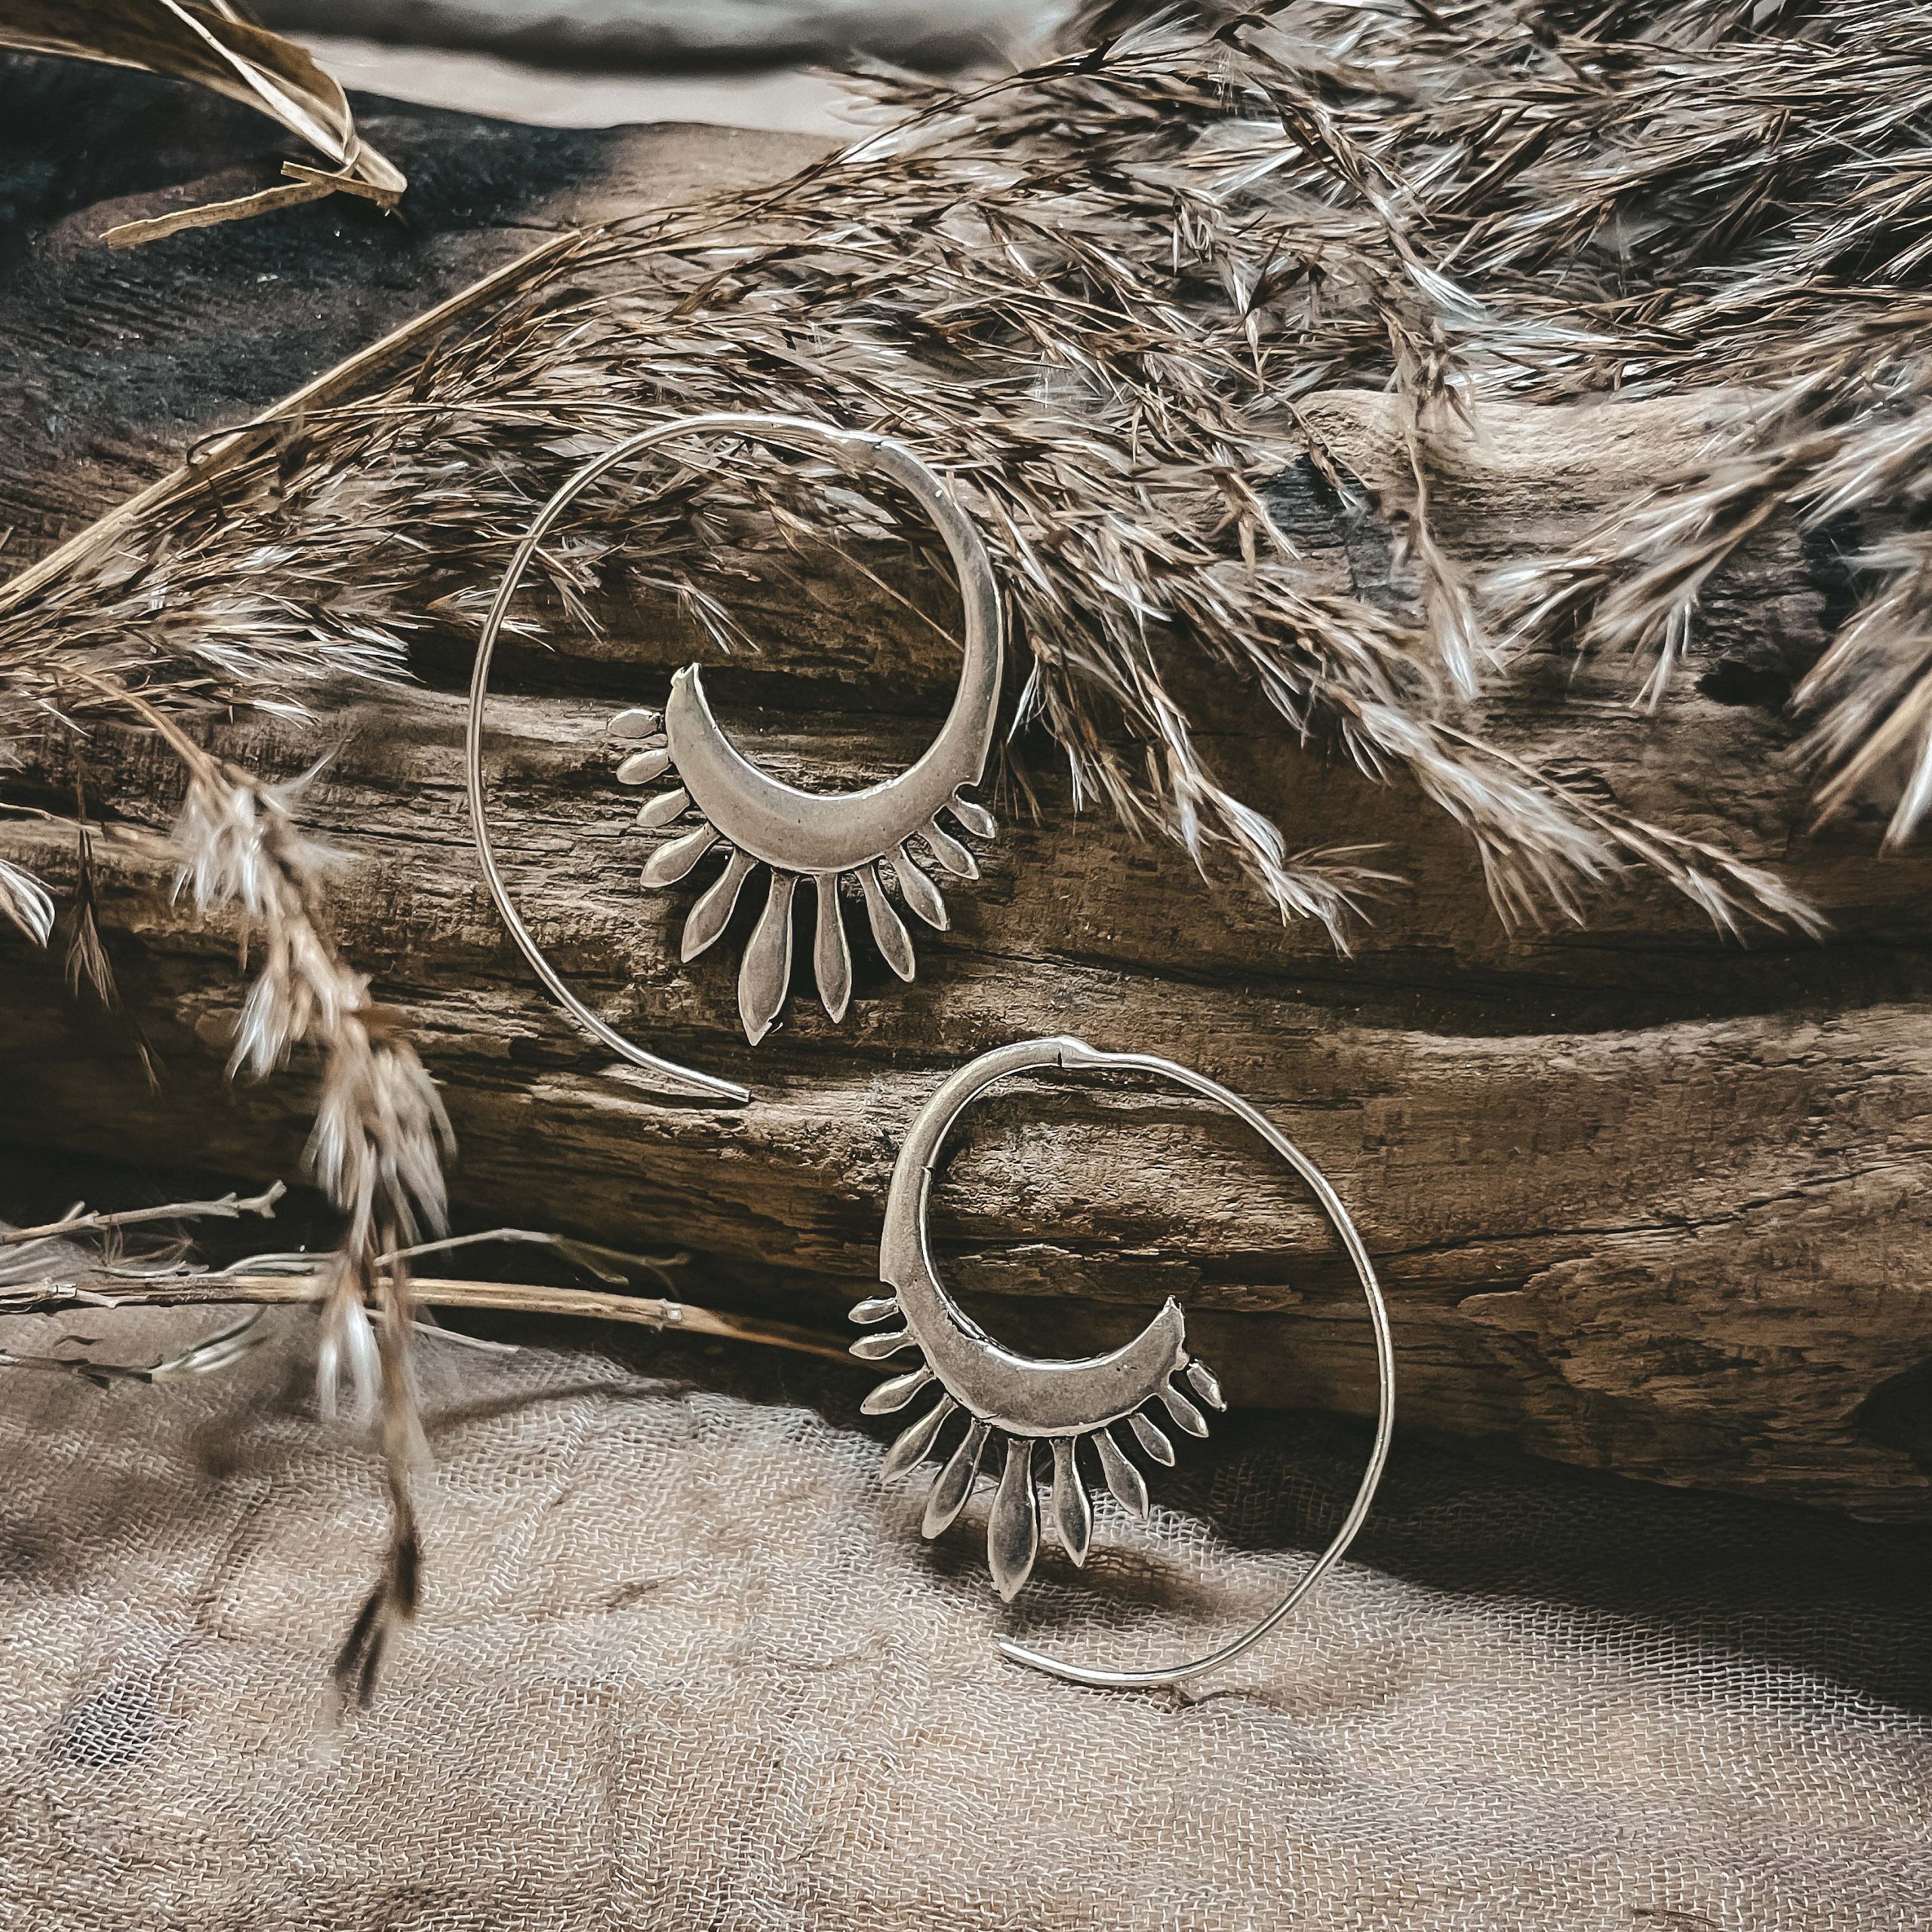 Silver Sun Spiral Earrings Silver Plated Boho Ethnic Gypsy Jewellery elegant